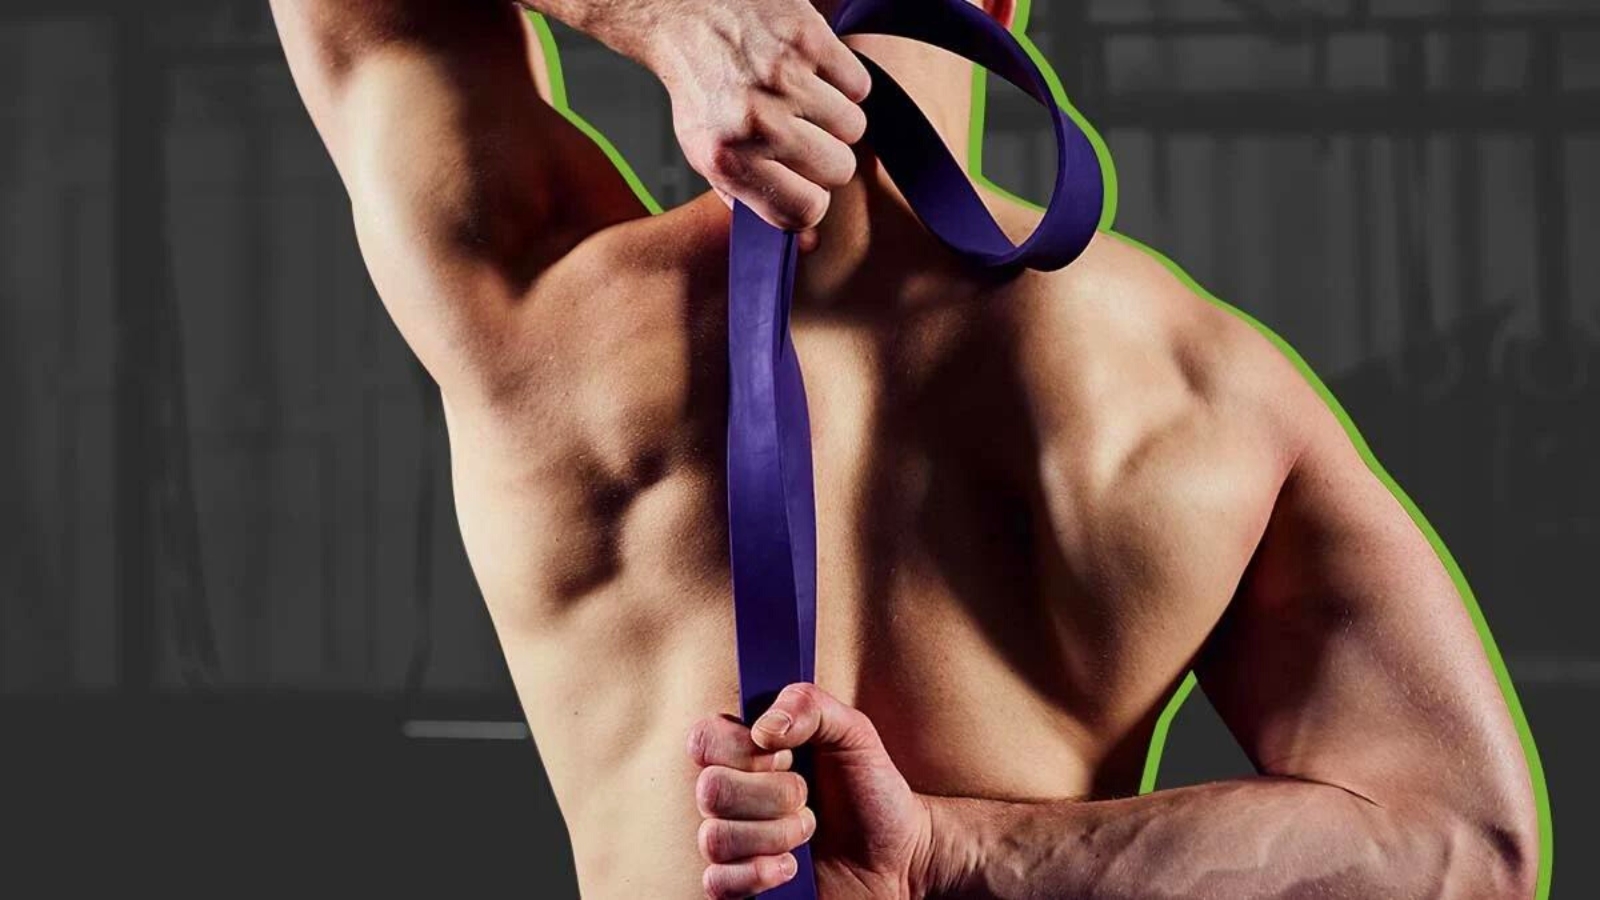 12 Full-Body, Muscle-Building Exercises that Use Sliders - Men's